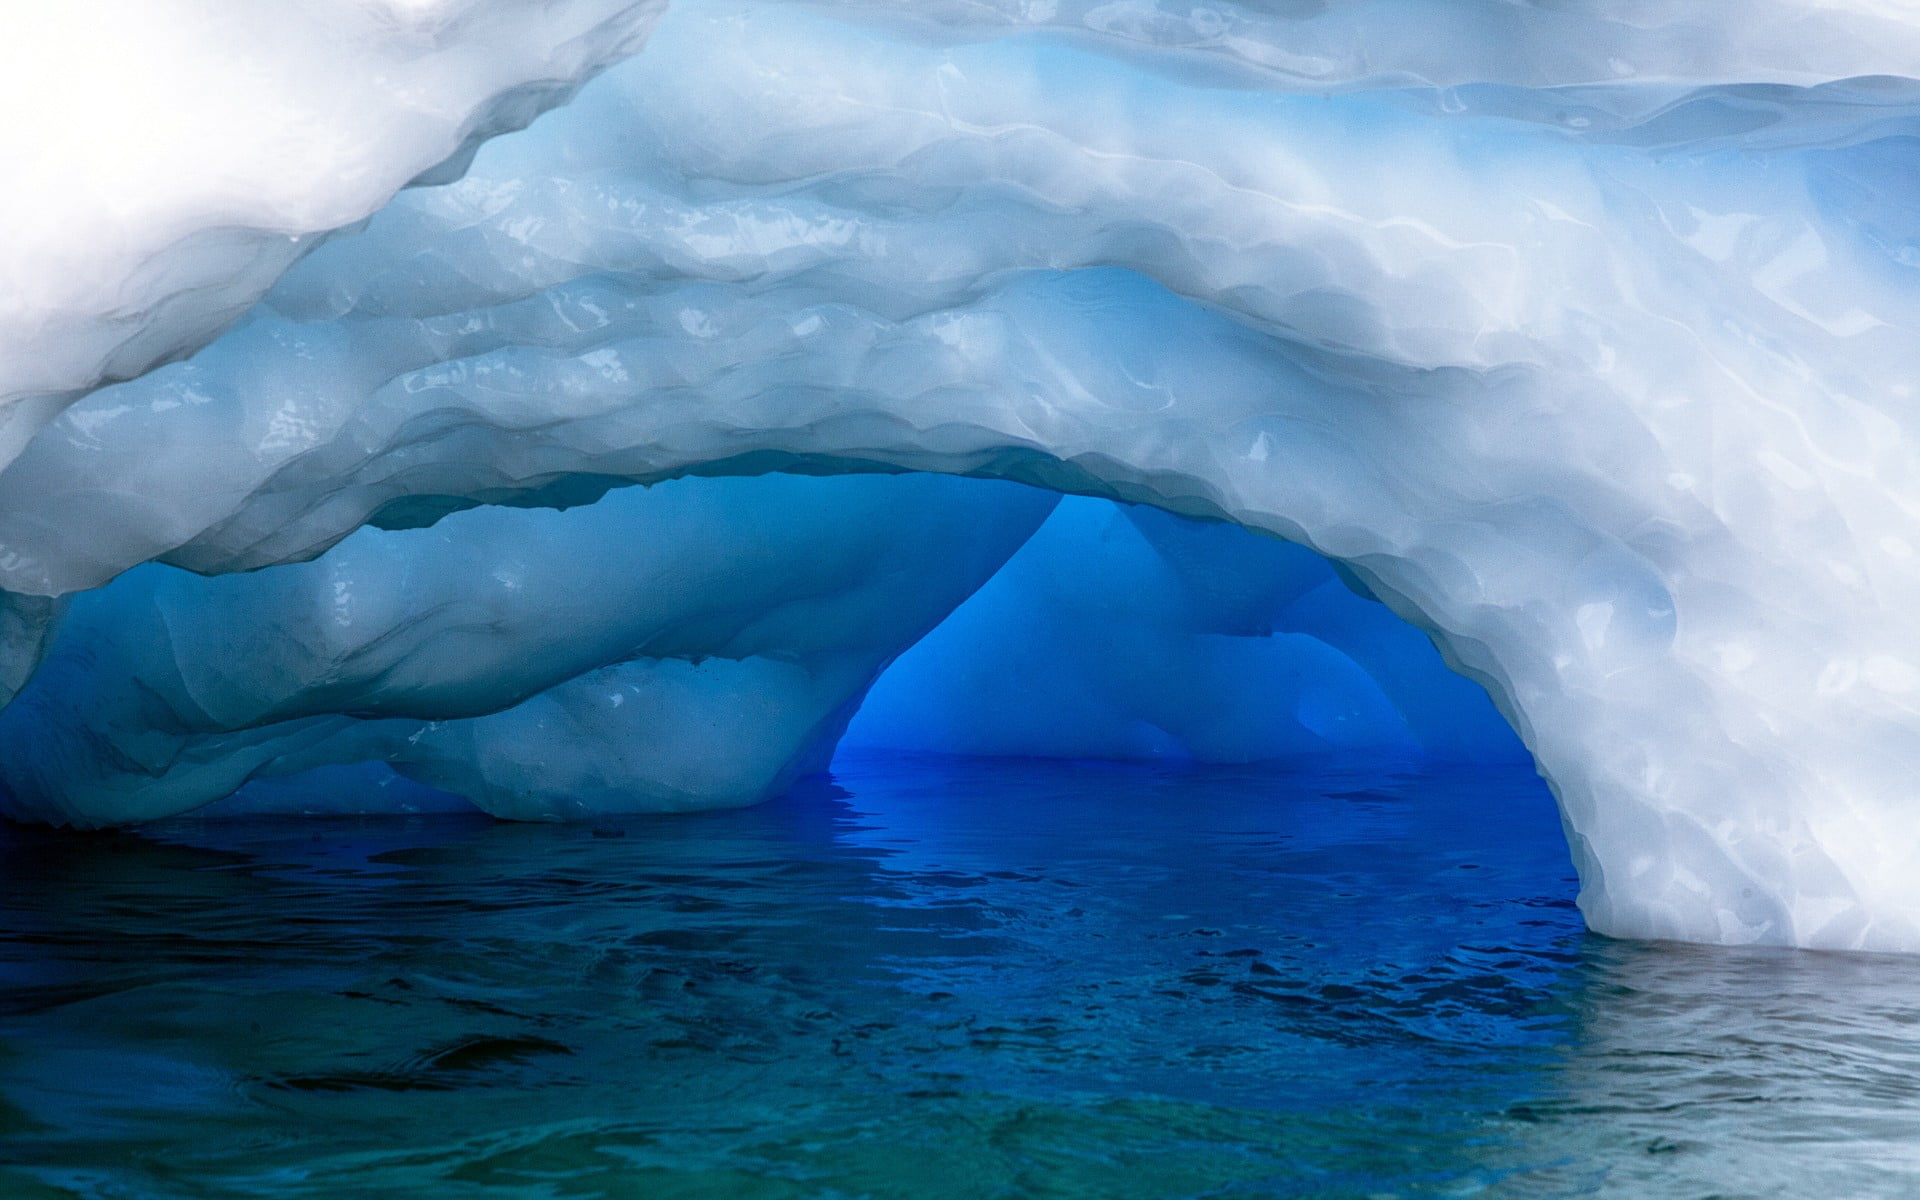 nature, ice, landscape, iceberg, water, cold temperature, frozen